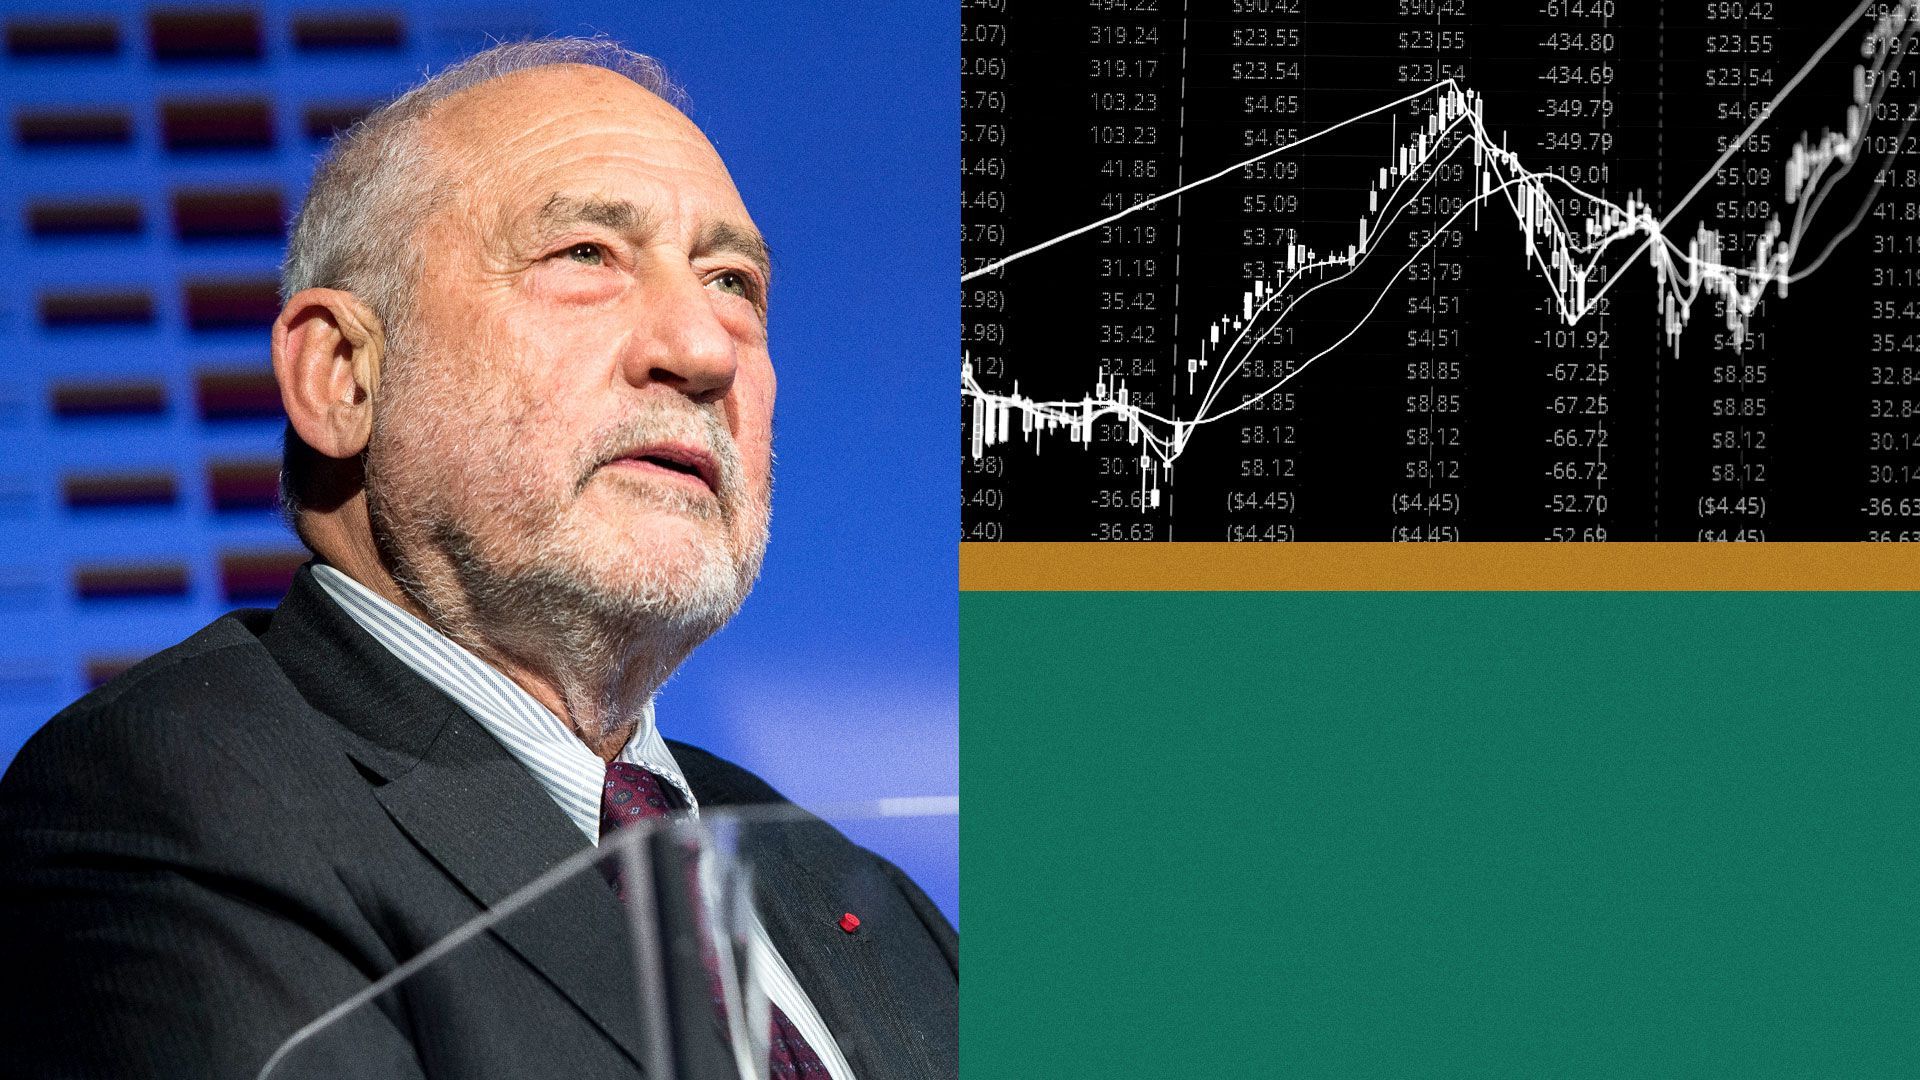 Photo illustration of Joseph Stiglitz and a stock chart.